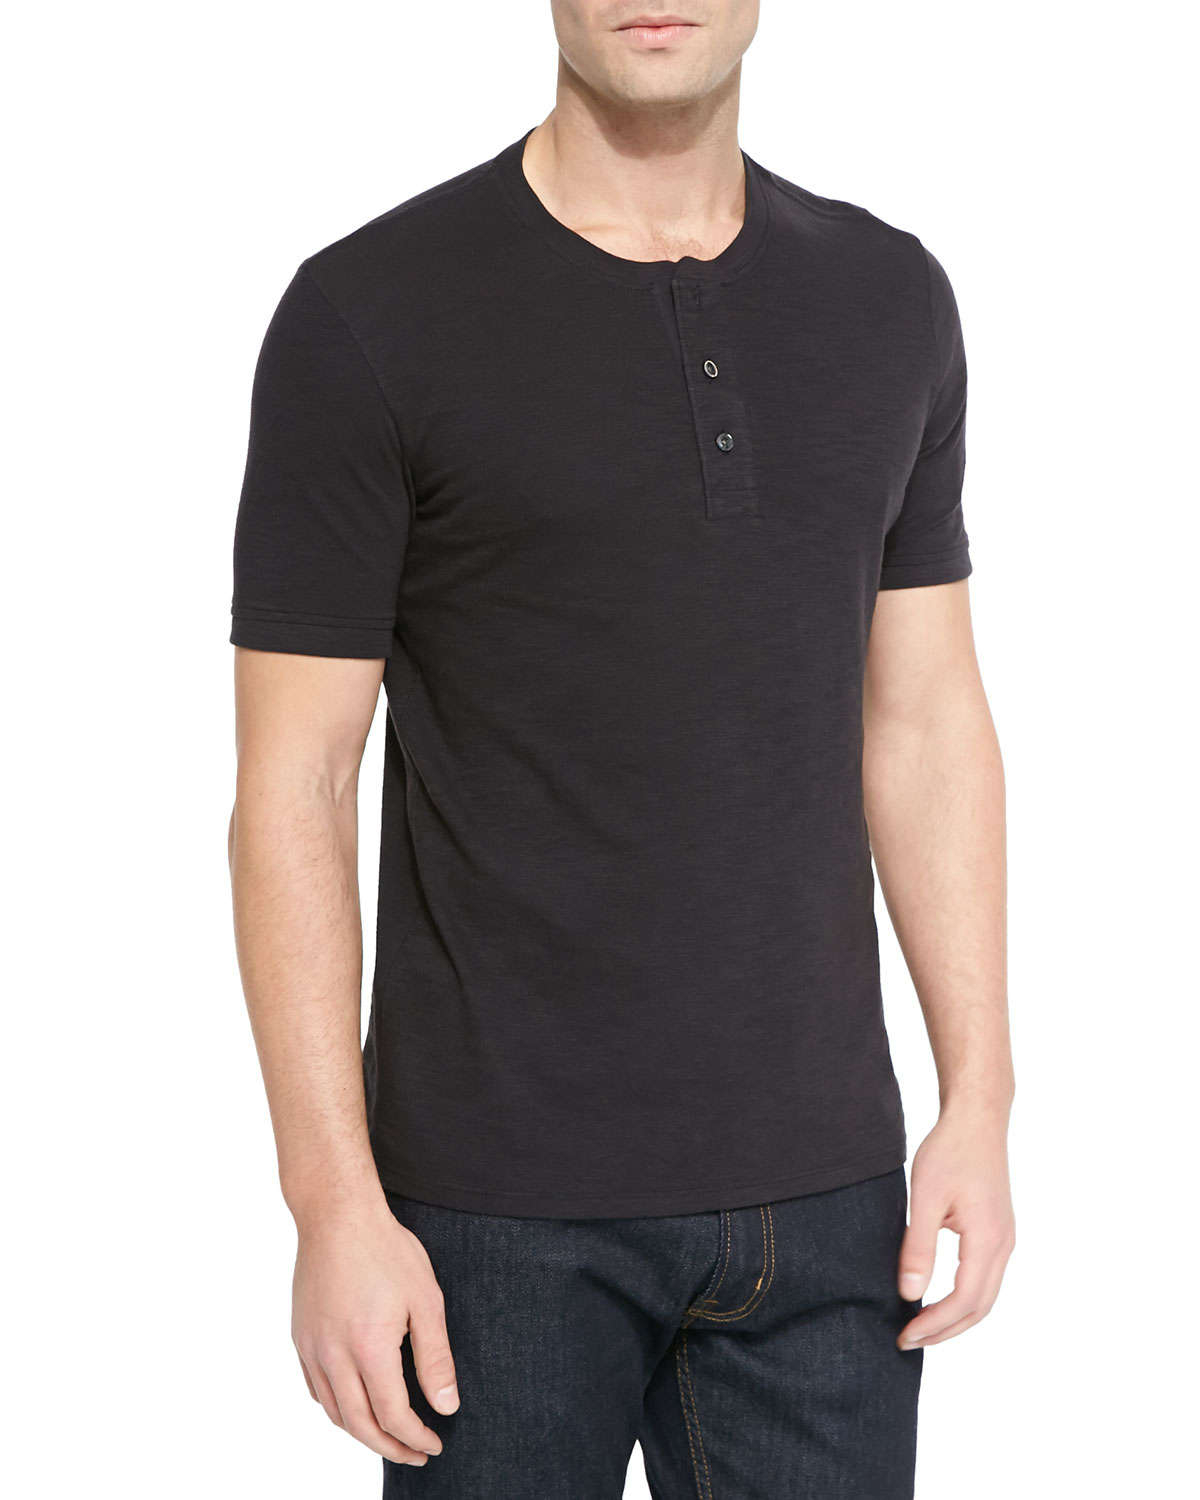 Lyst - Vince Basic Cotton Henley T-Shirt in Black for Men